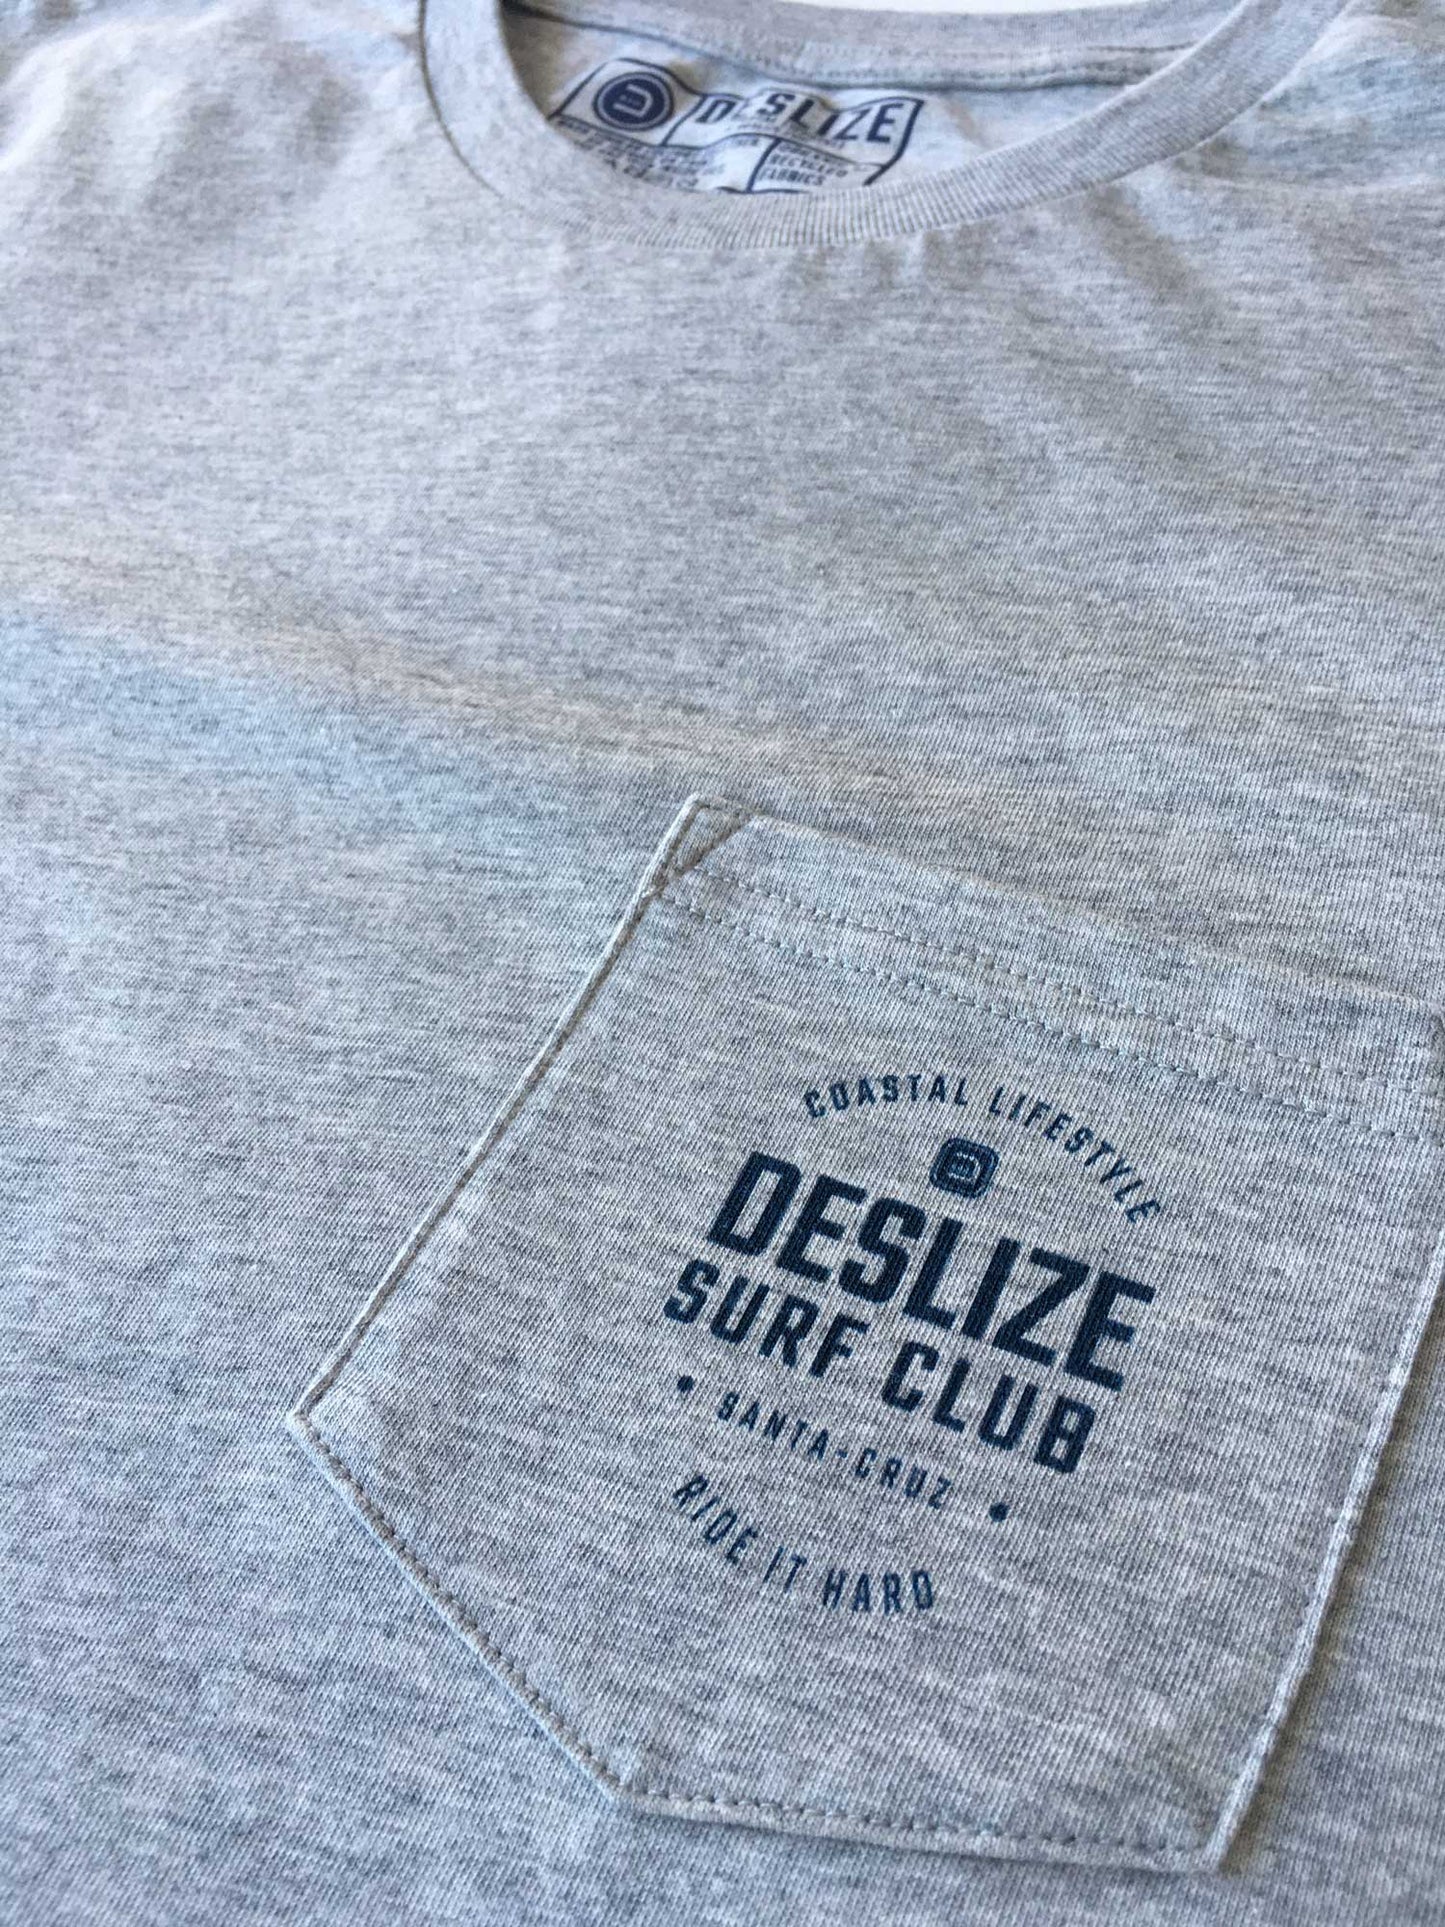 Grey Desilze Surf Club pocket Tshirt, Front side close-up